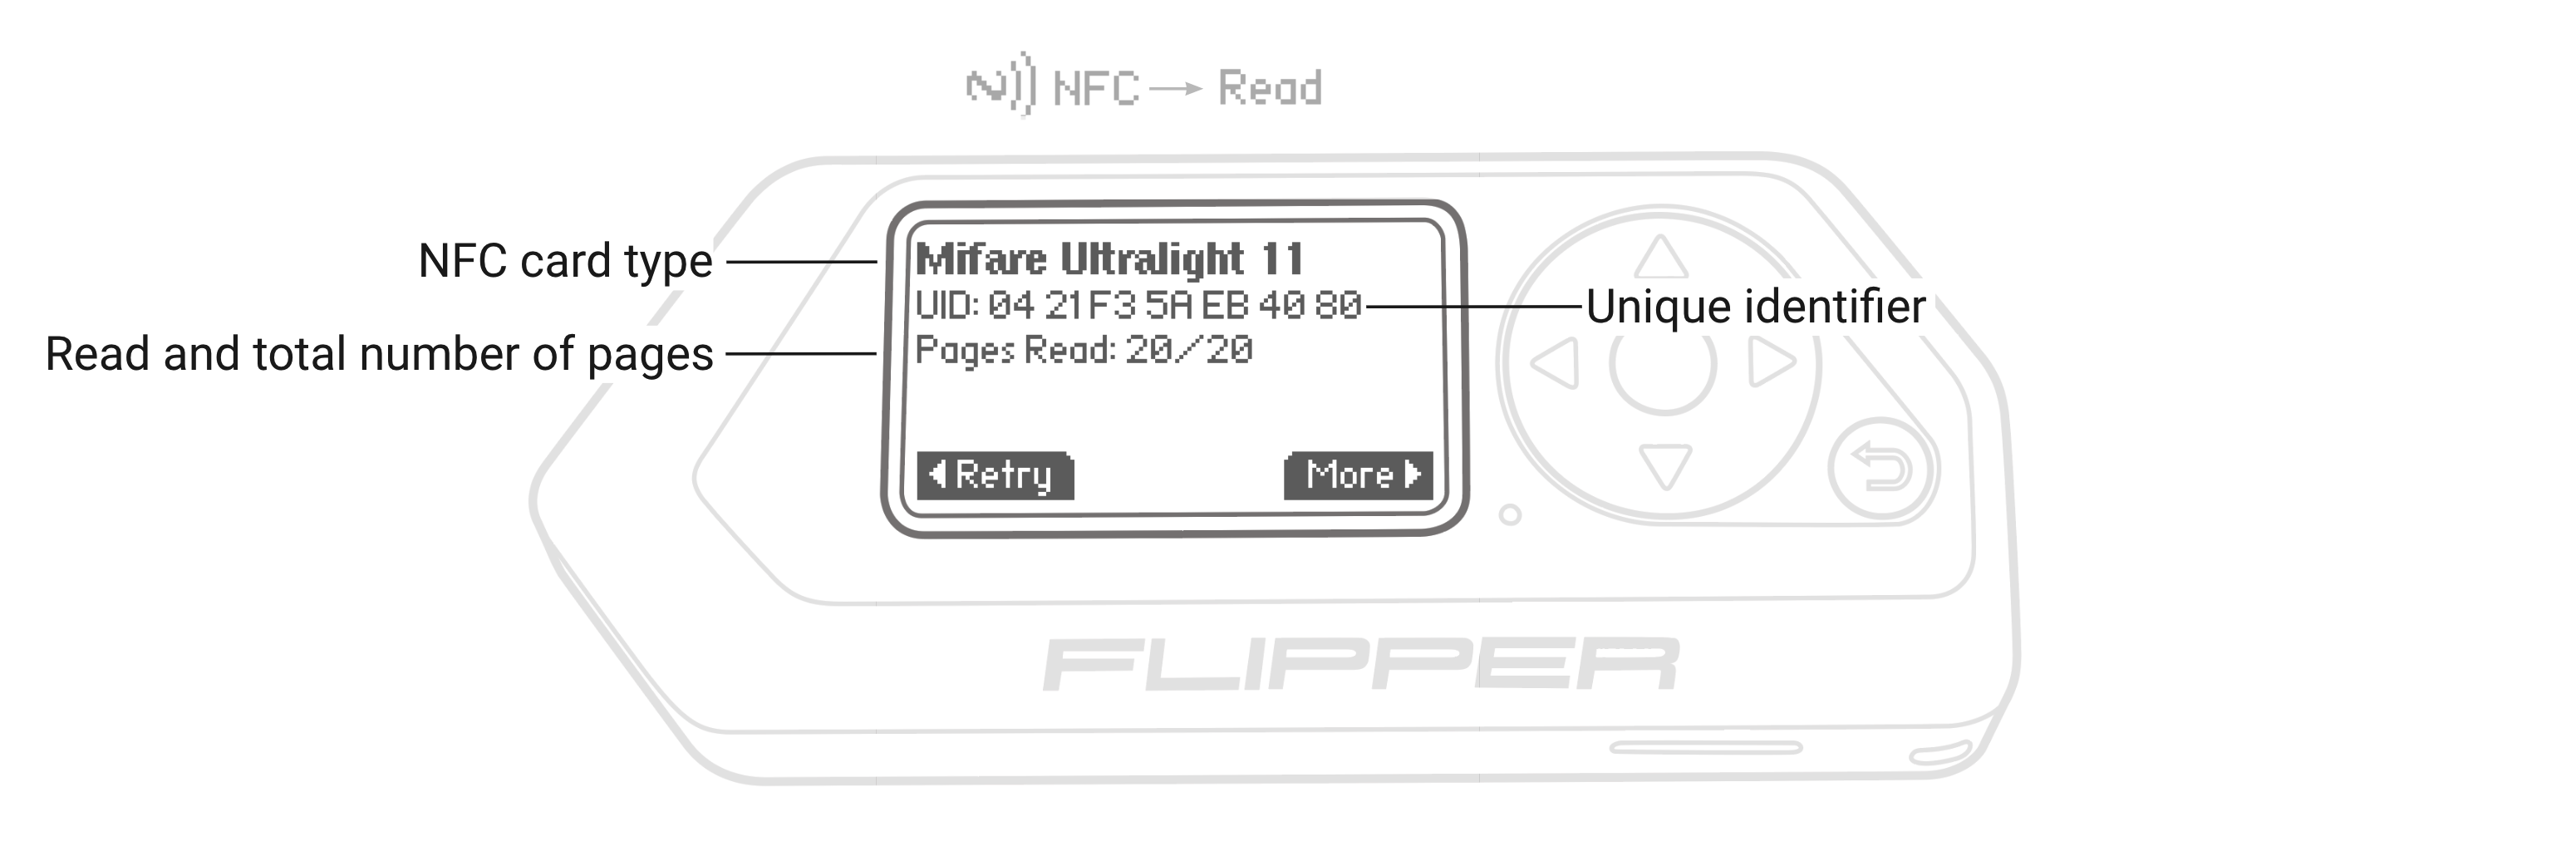 MIFARE Ultralight & NTAG reading screen